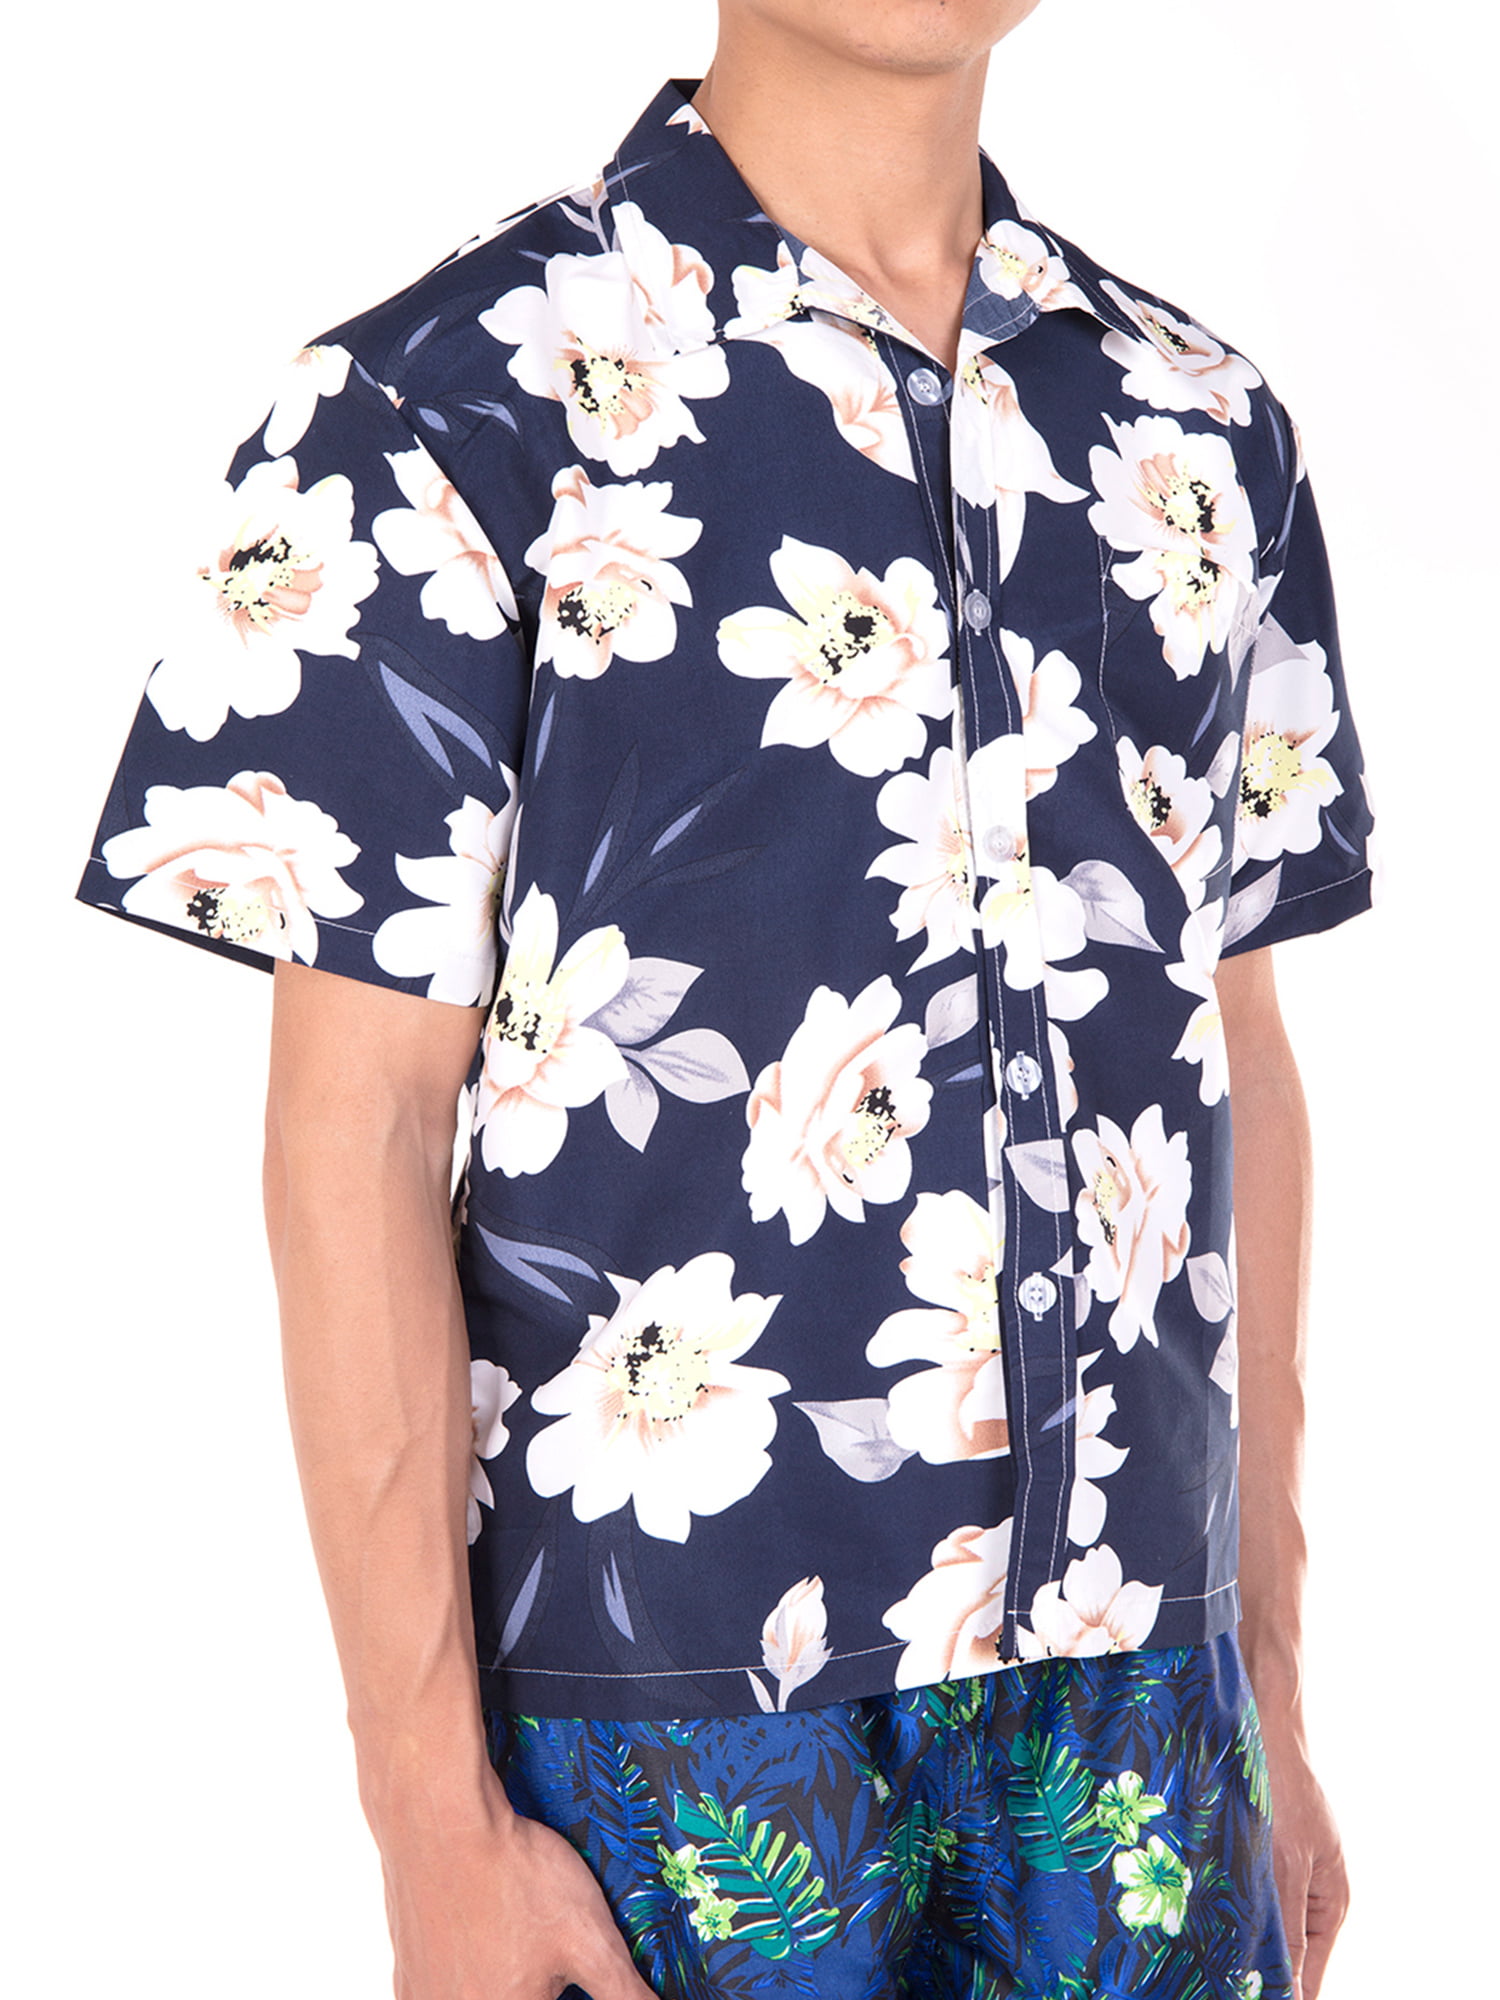 ZSBAYU Mens Hawaiian Short Sleeve Shirt Aloha Flower Print Casual Button Down Beach Shirts Party Flower Blouse